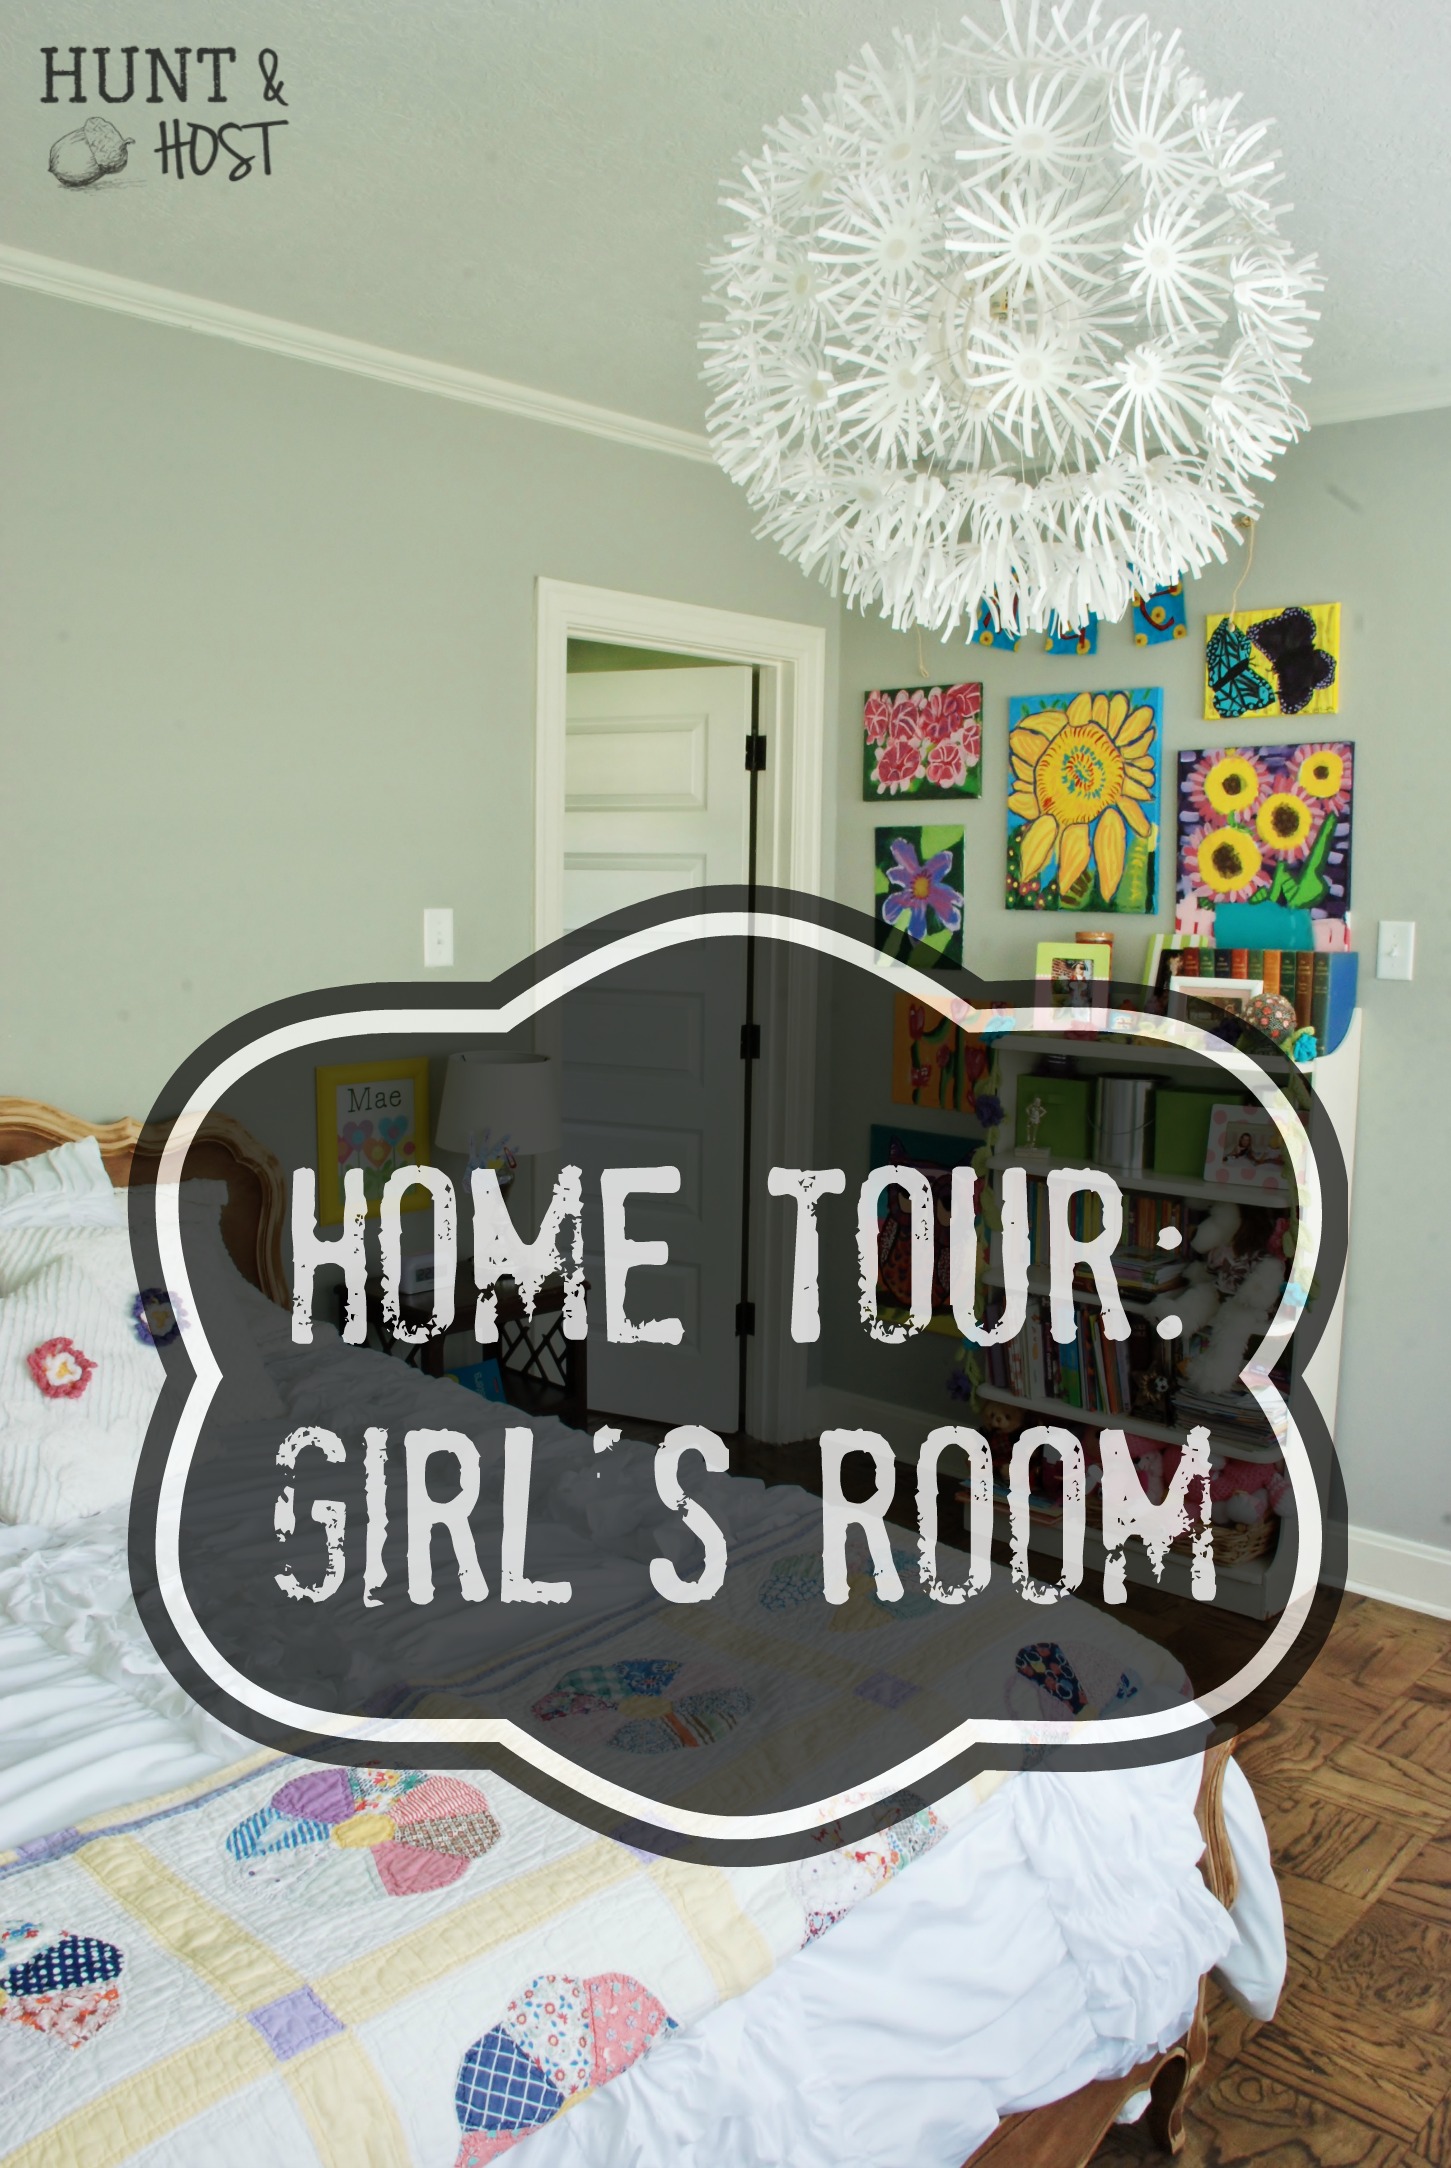 Hunt & Host Home Tour: Girl's Bedroom - Salvaged Living